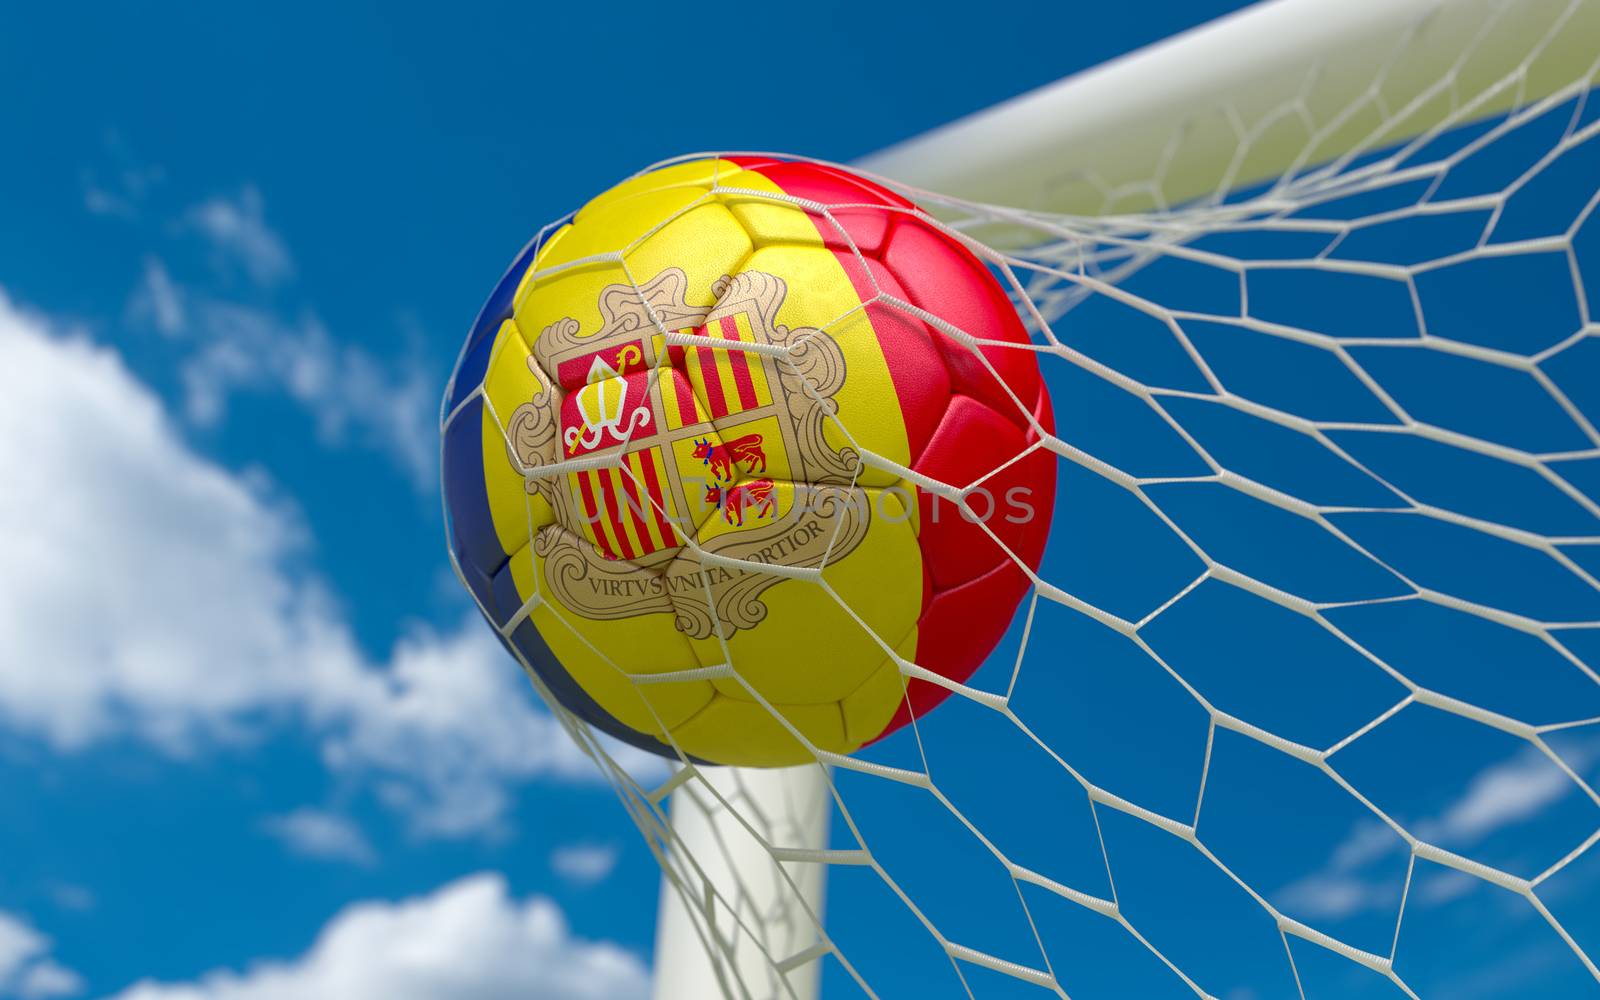 Andorra flag and soccer ball, football in goal net